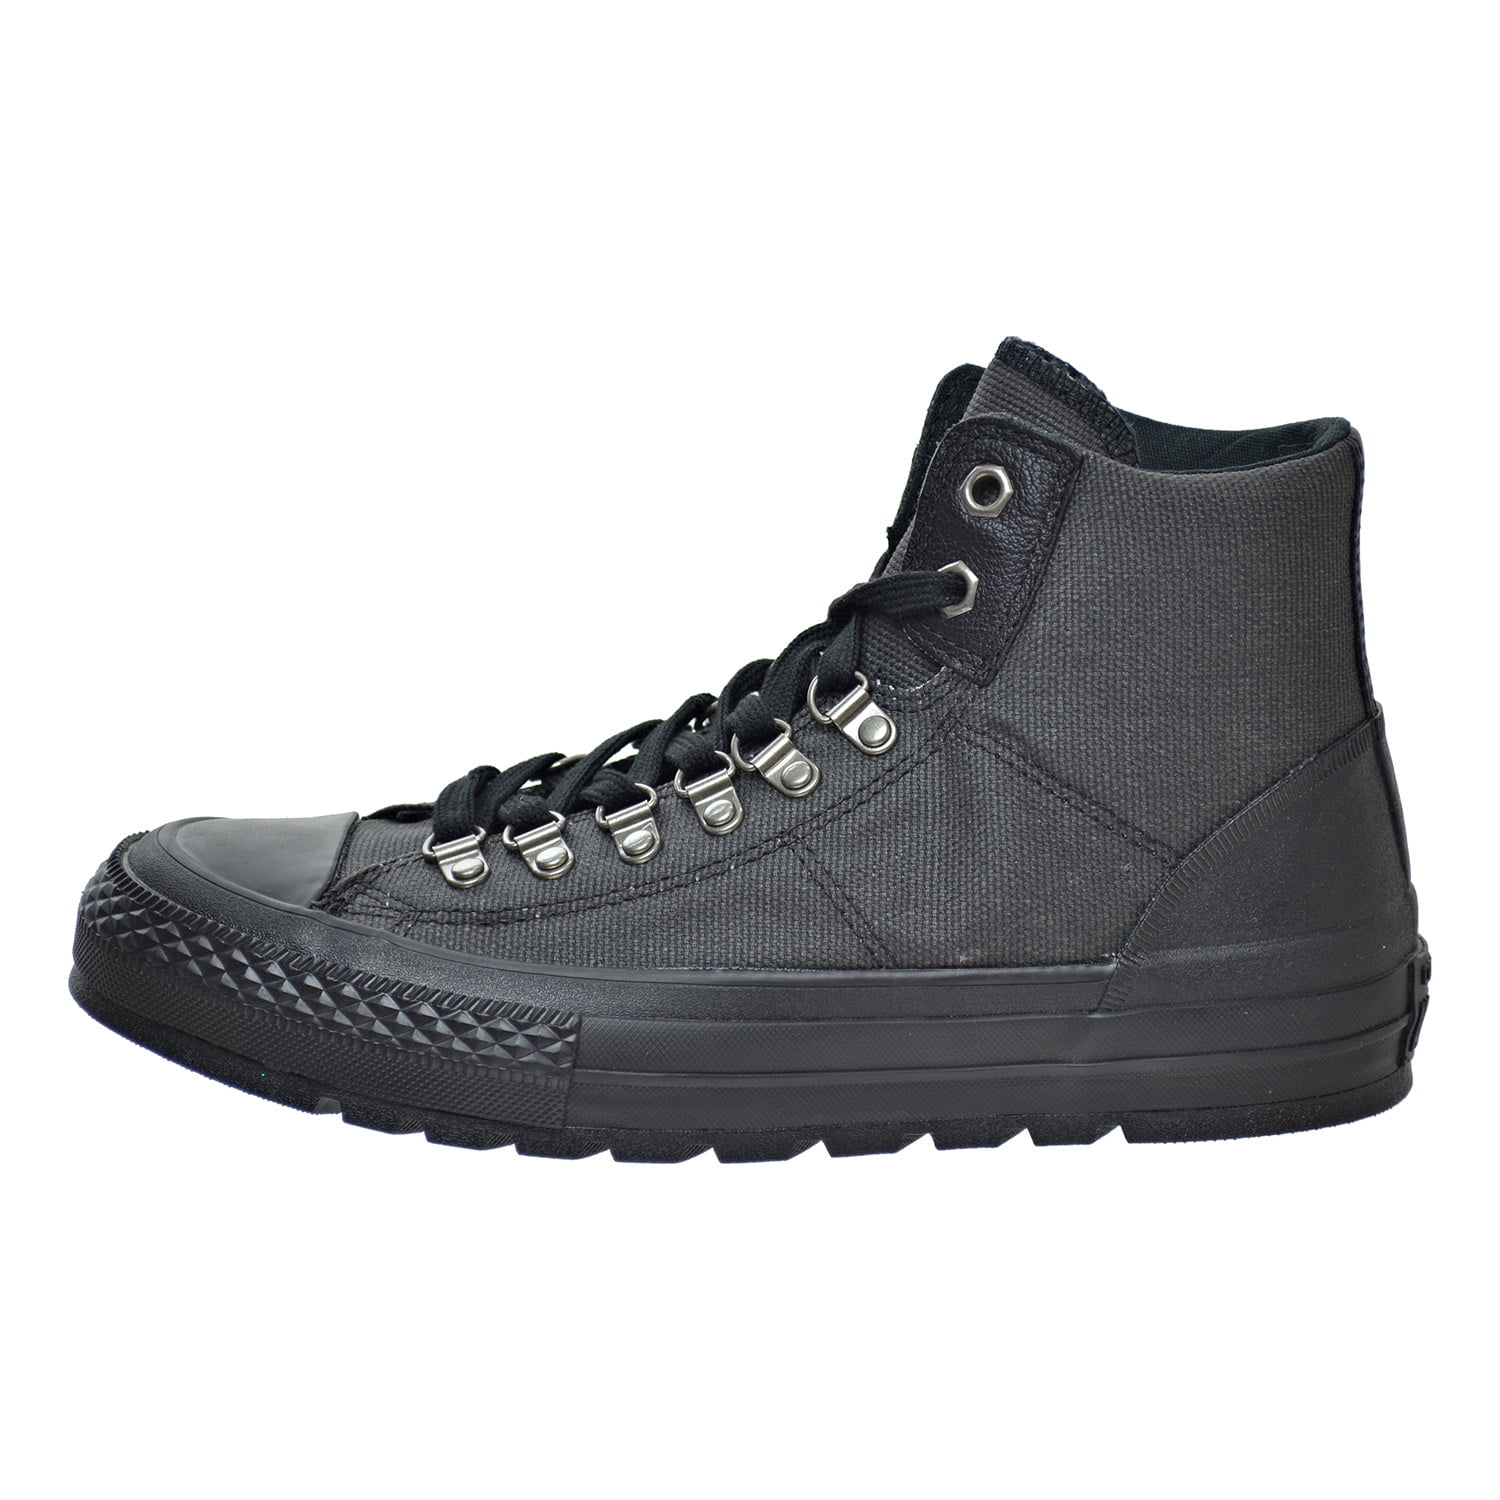 Converse Chuck Taylor Street Hiker Shoes Black -